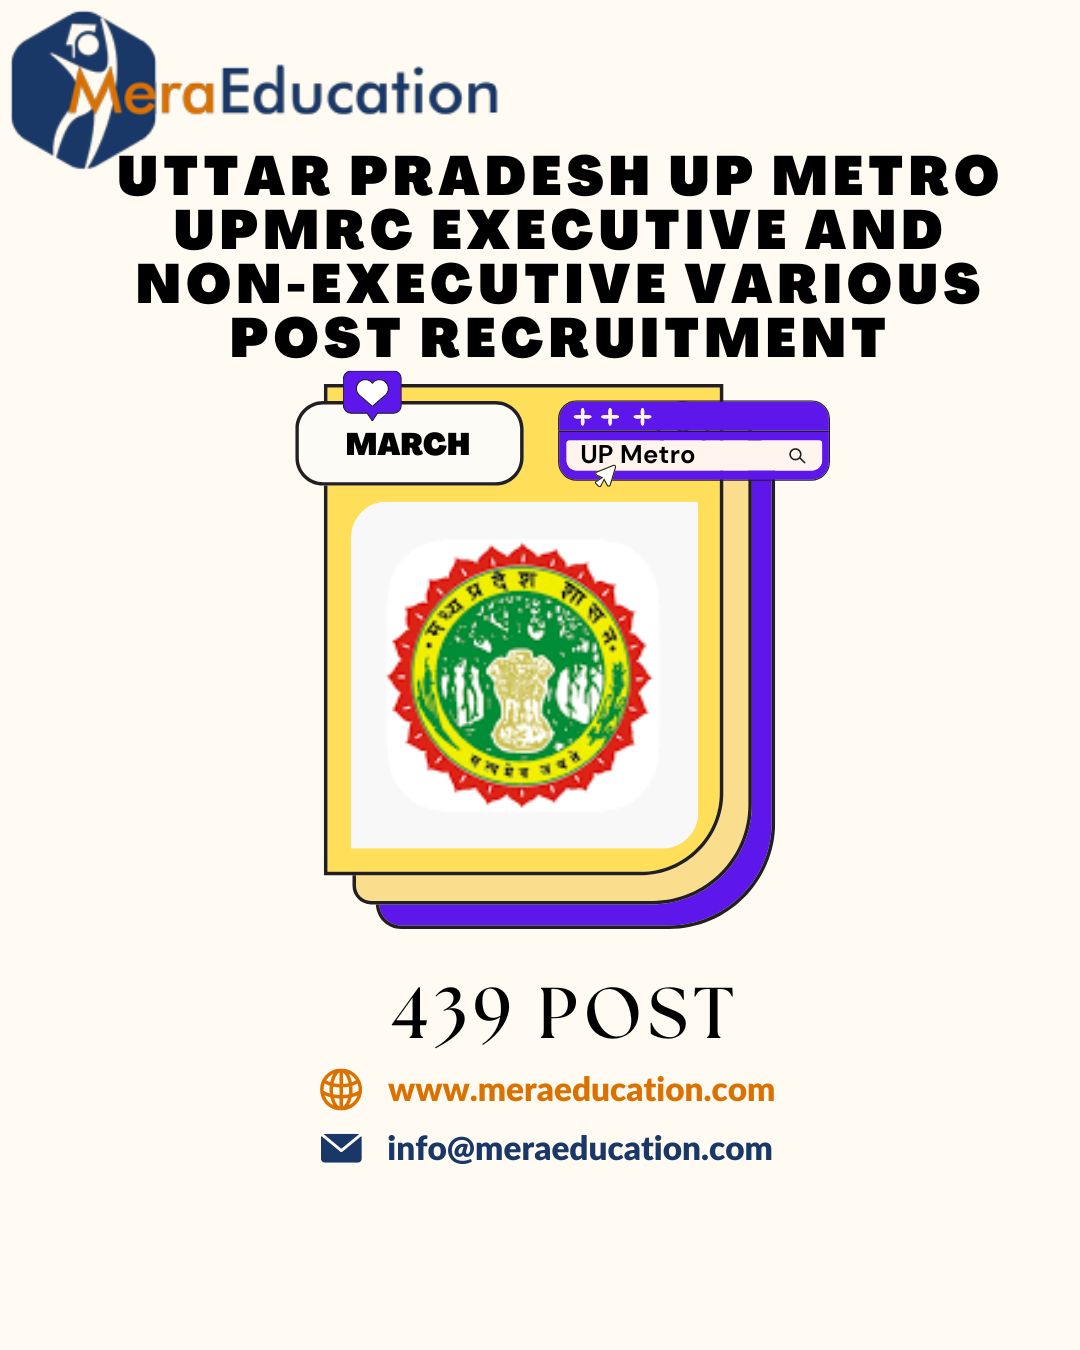 Uttar Pradesh Metro MeraEducation